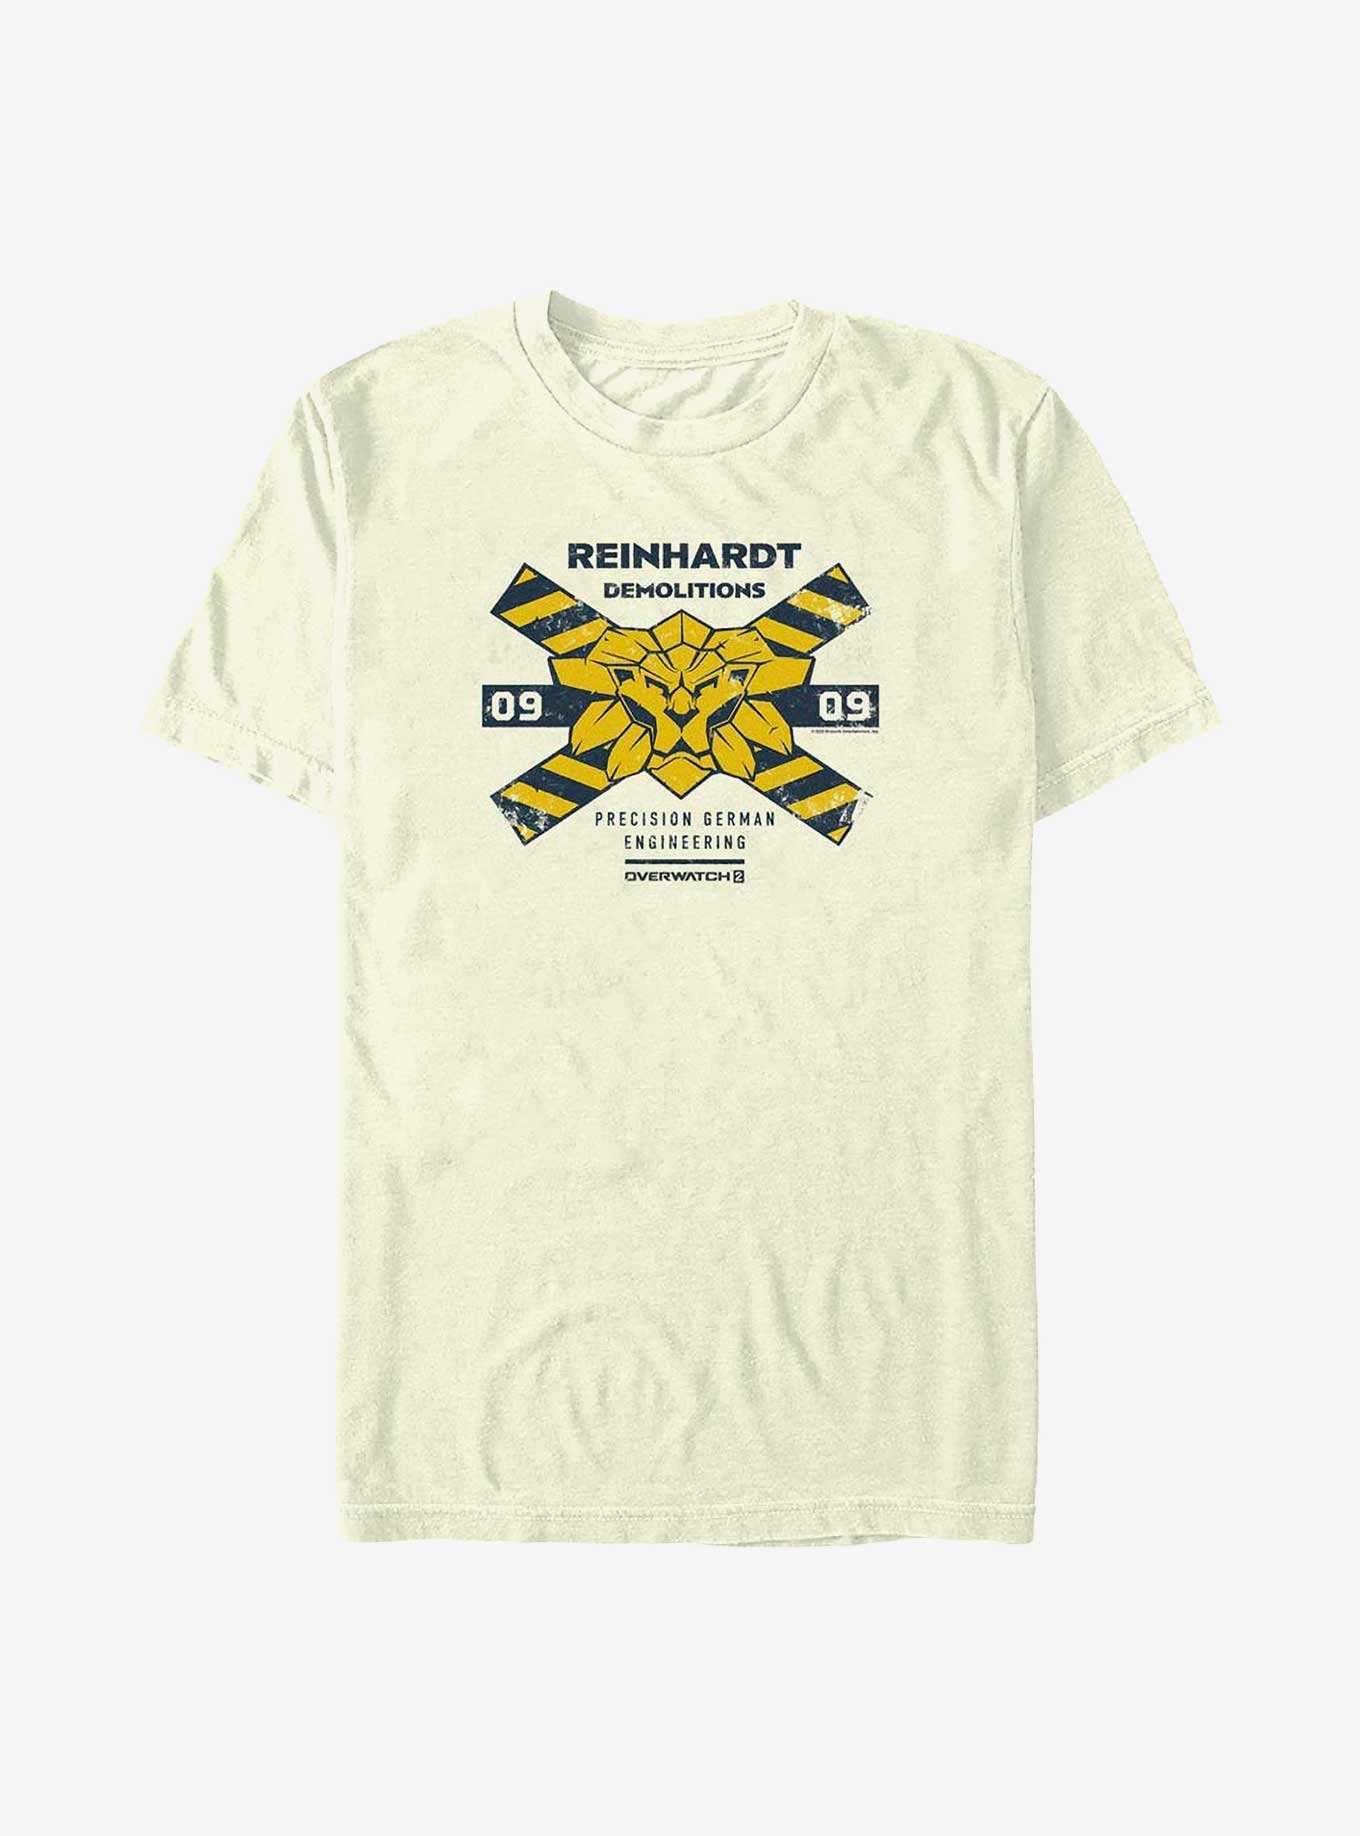 Overwatch 2 Reinhardt Demolitions T-Shirt, , hi-res